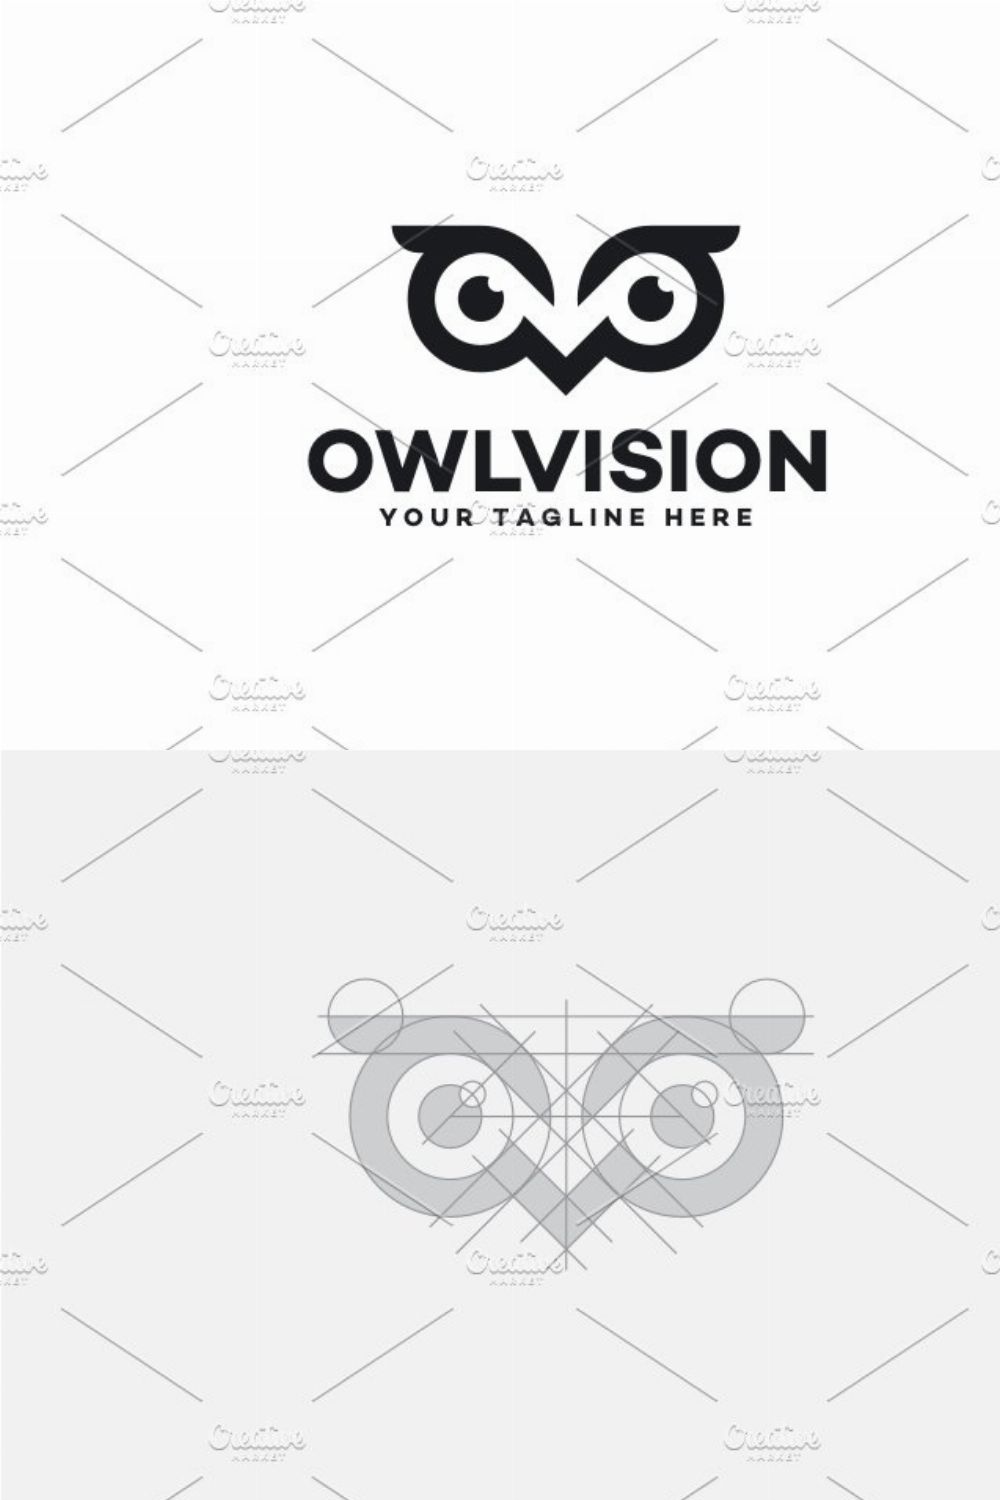 Owl Eye Logo pinterest preview image.